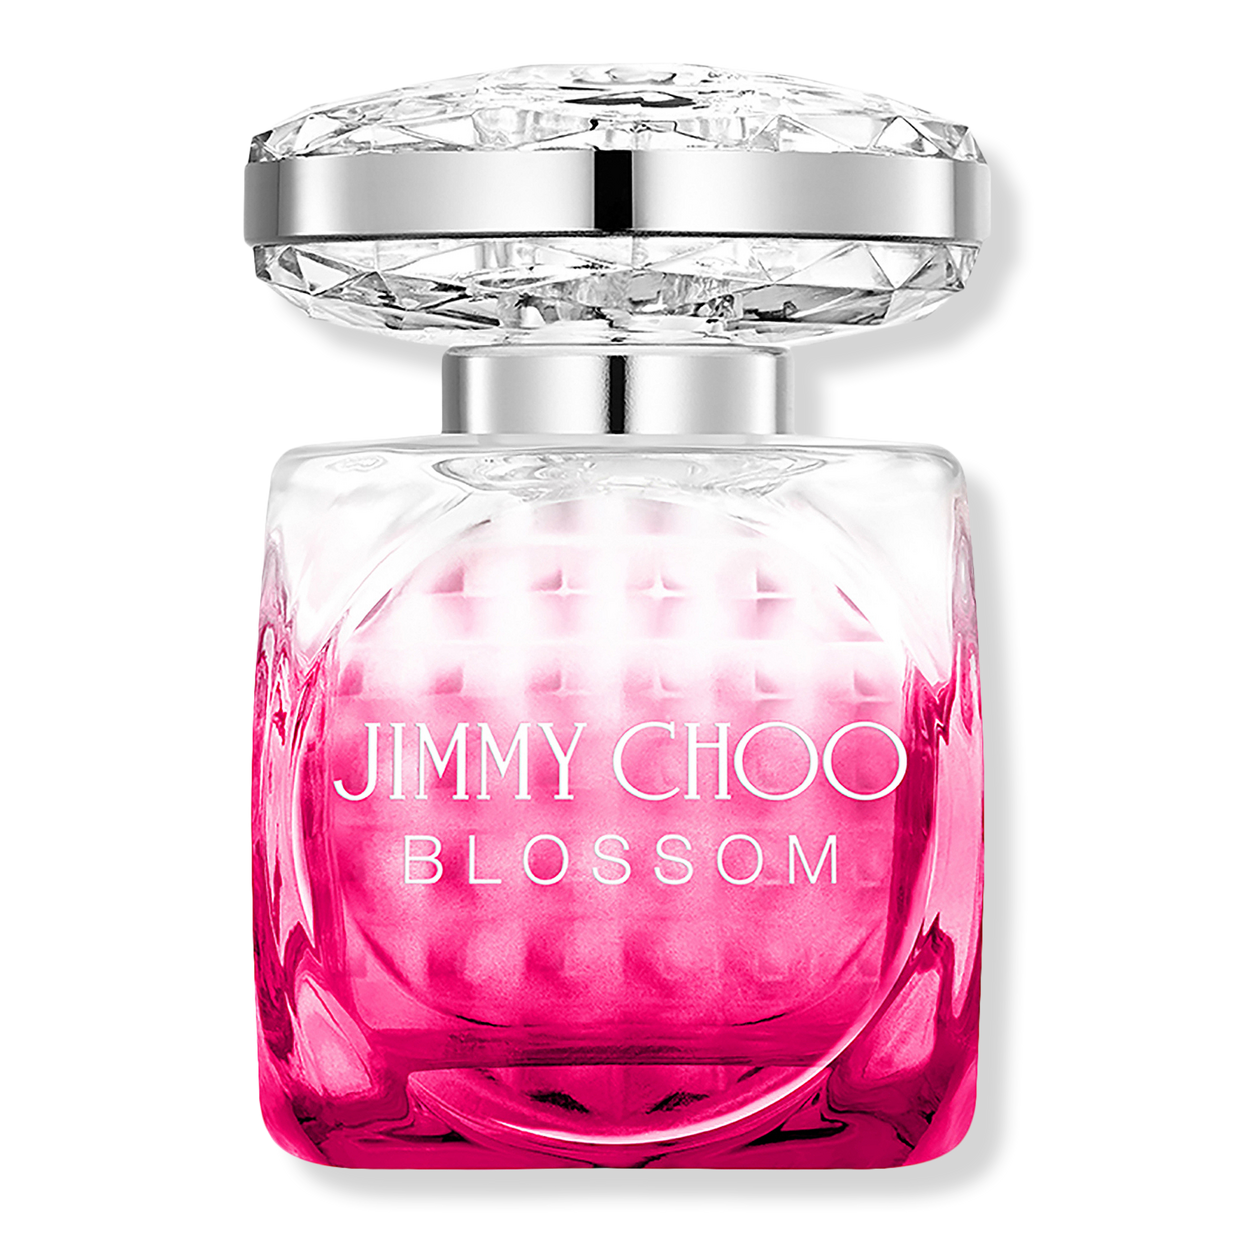 Blossom Jimmy Choo Perfume Shop Online | skt.zst.tarnow.pl